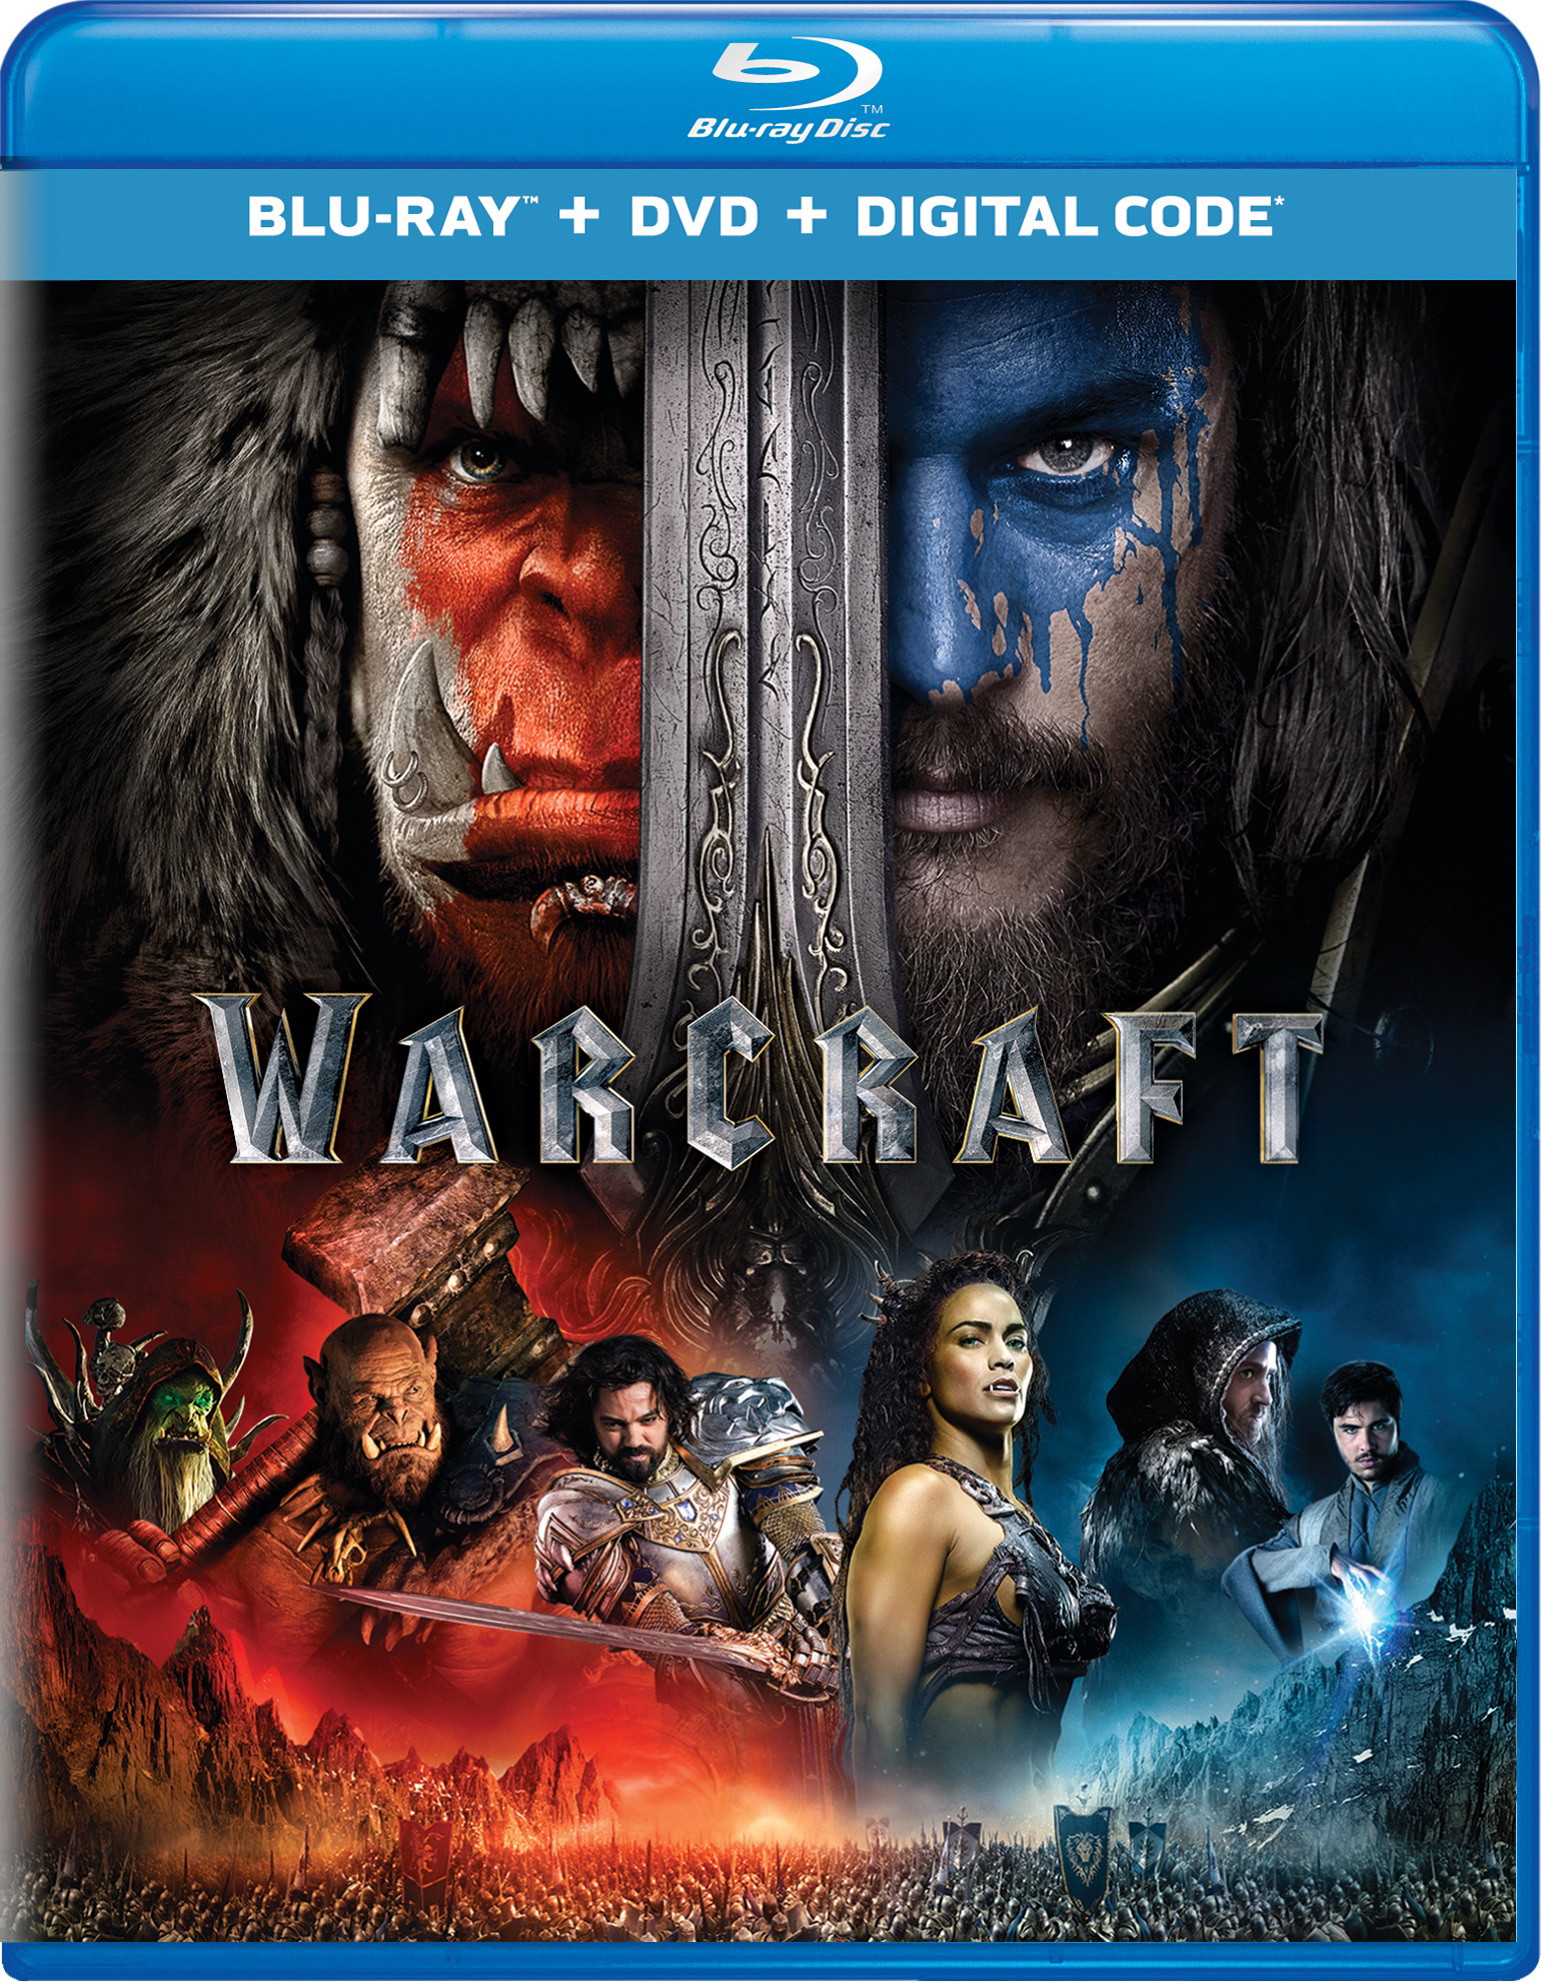 Warcraft: The Beginning (DVD) - Blu-ray [ 2016 ]  - Adventure Movies On Blu-ray - Movies On GRUV